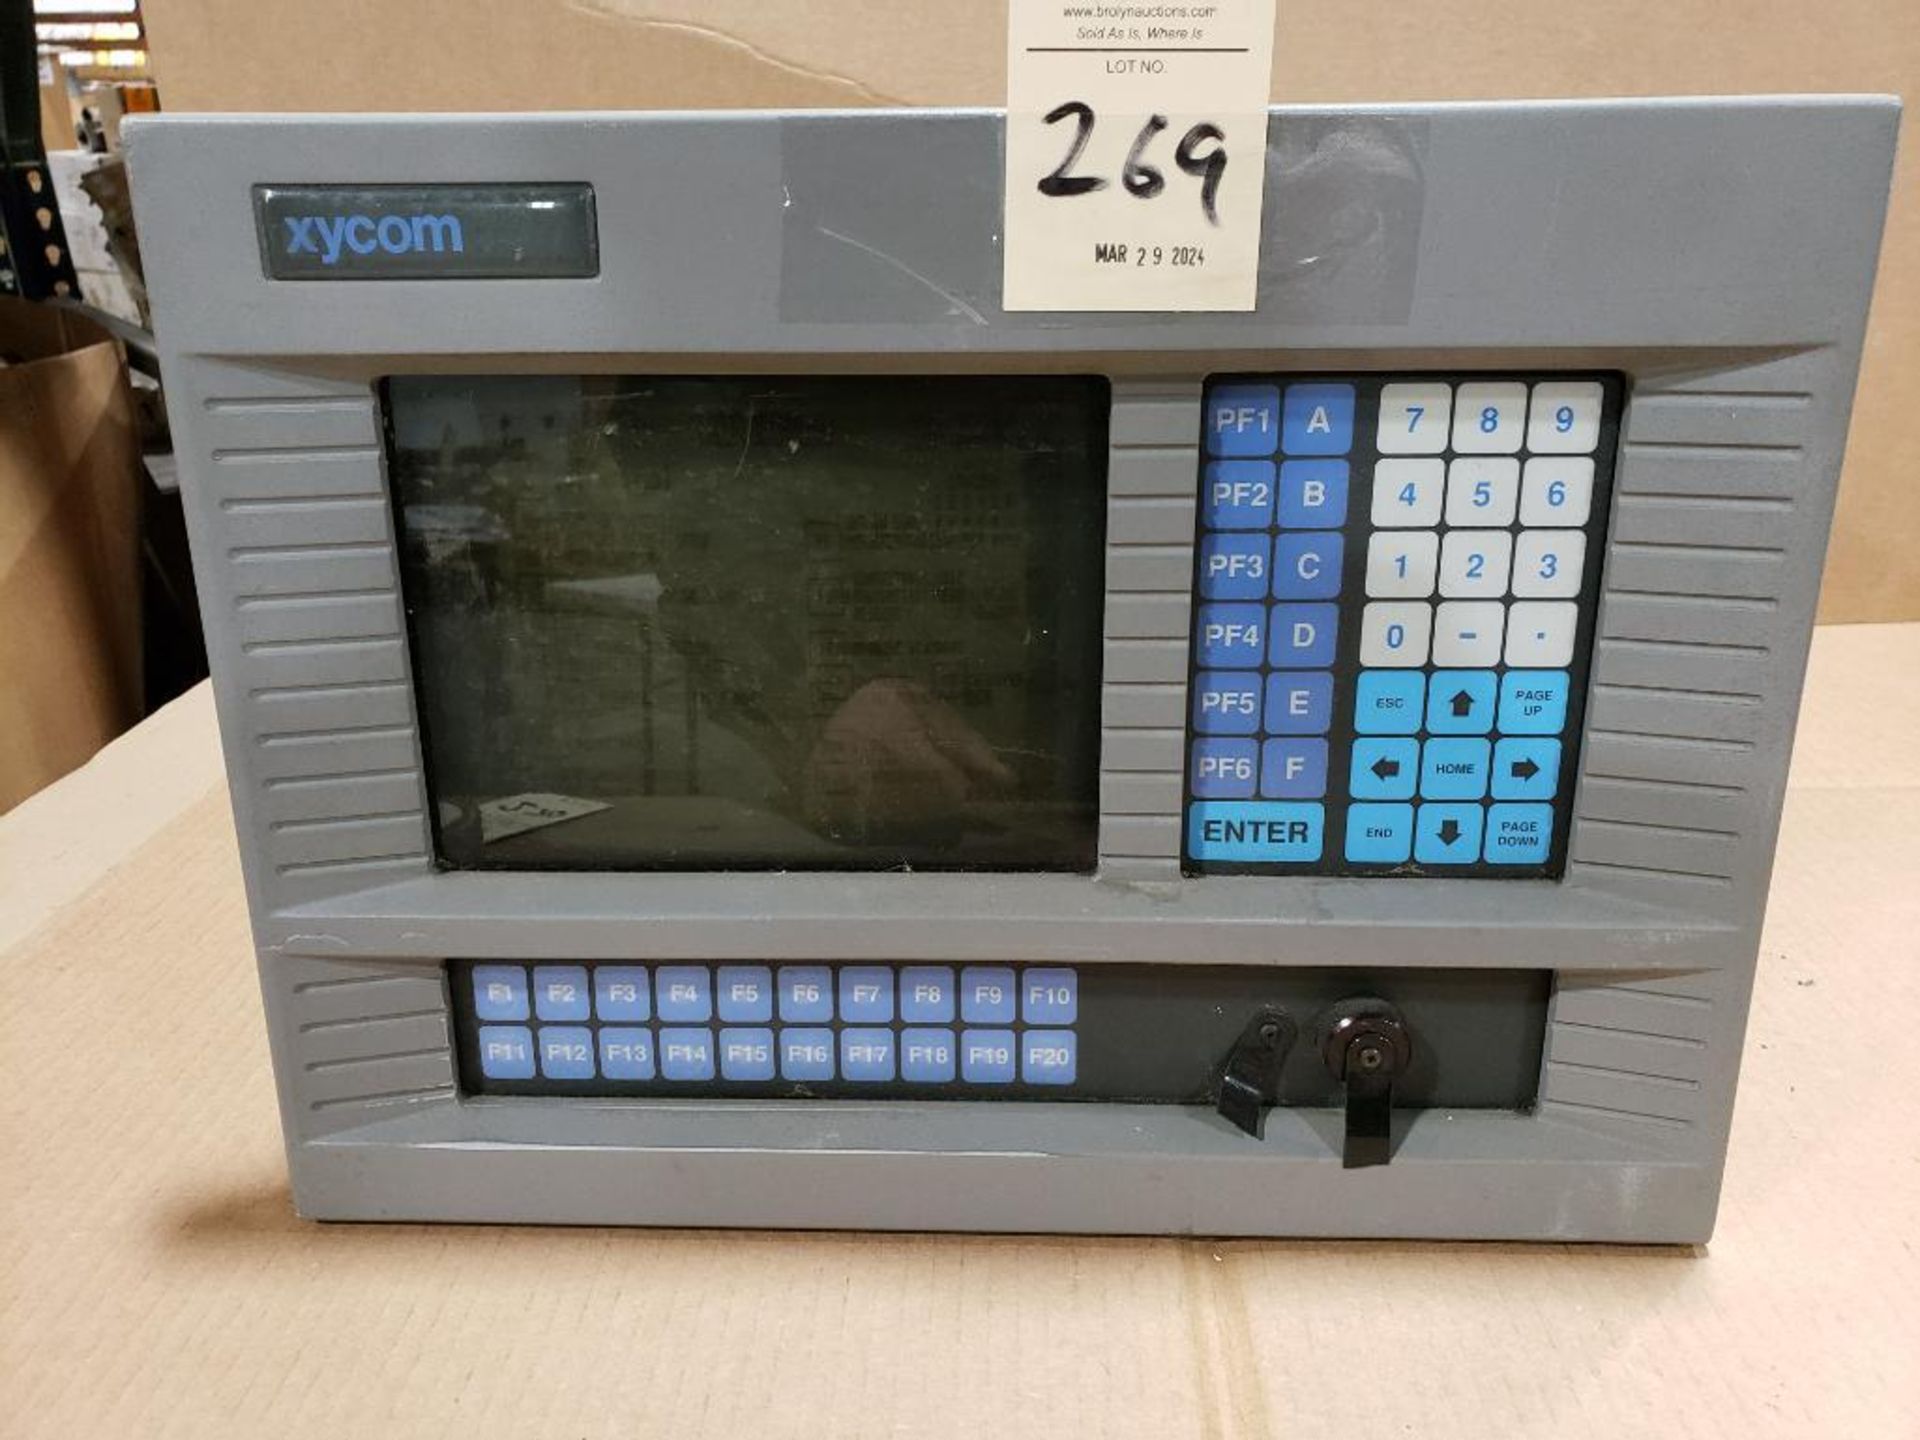 Xycom machine control. Model 2005.